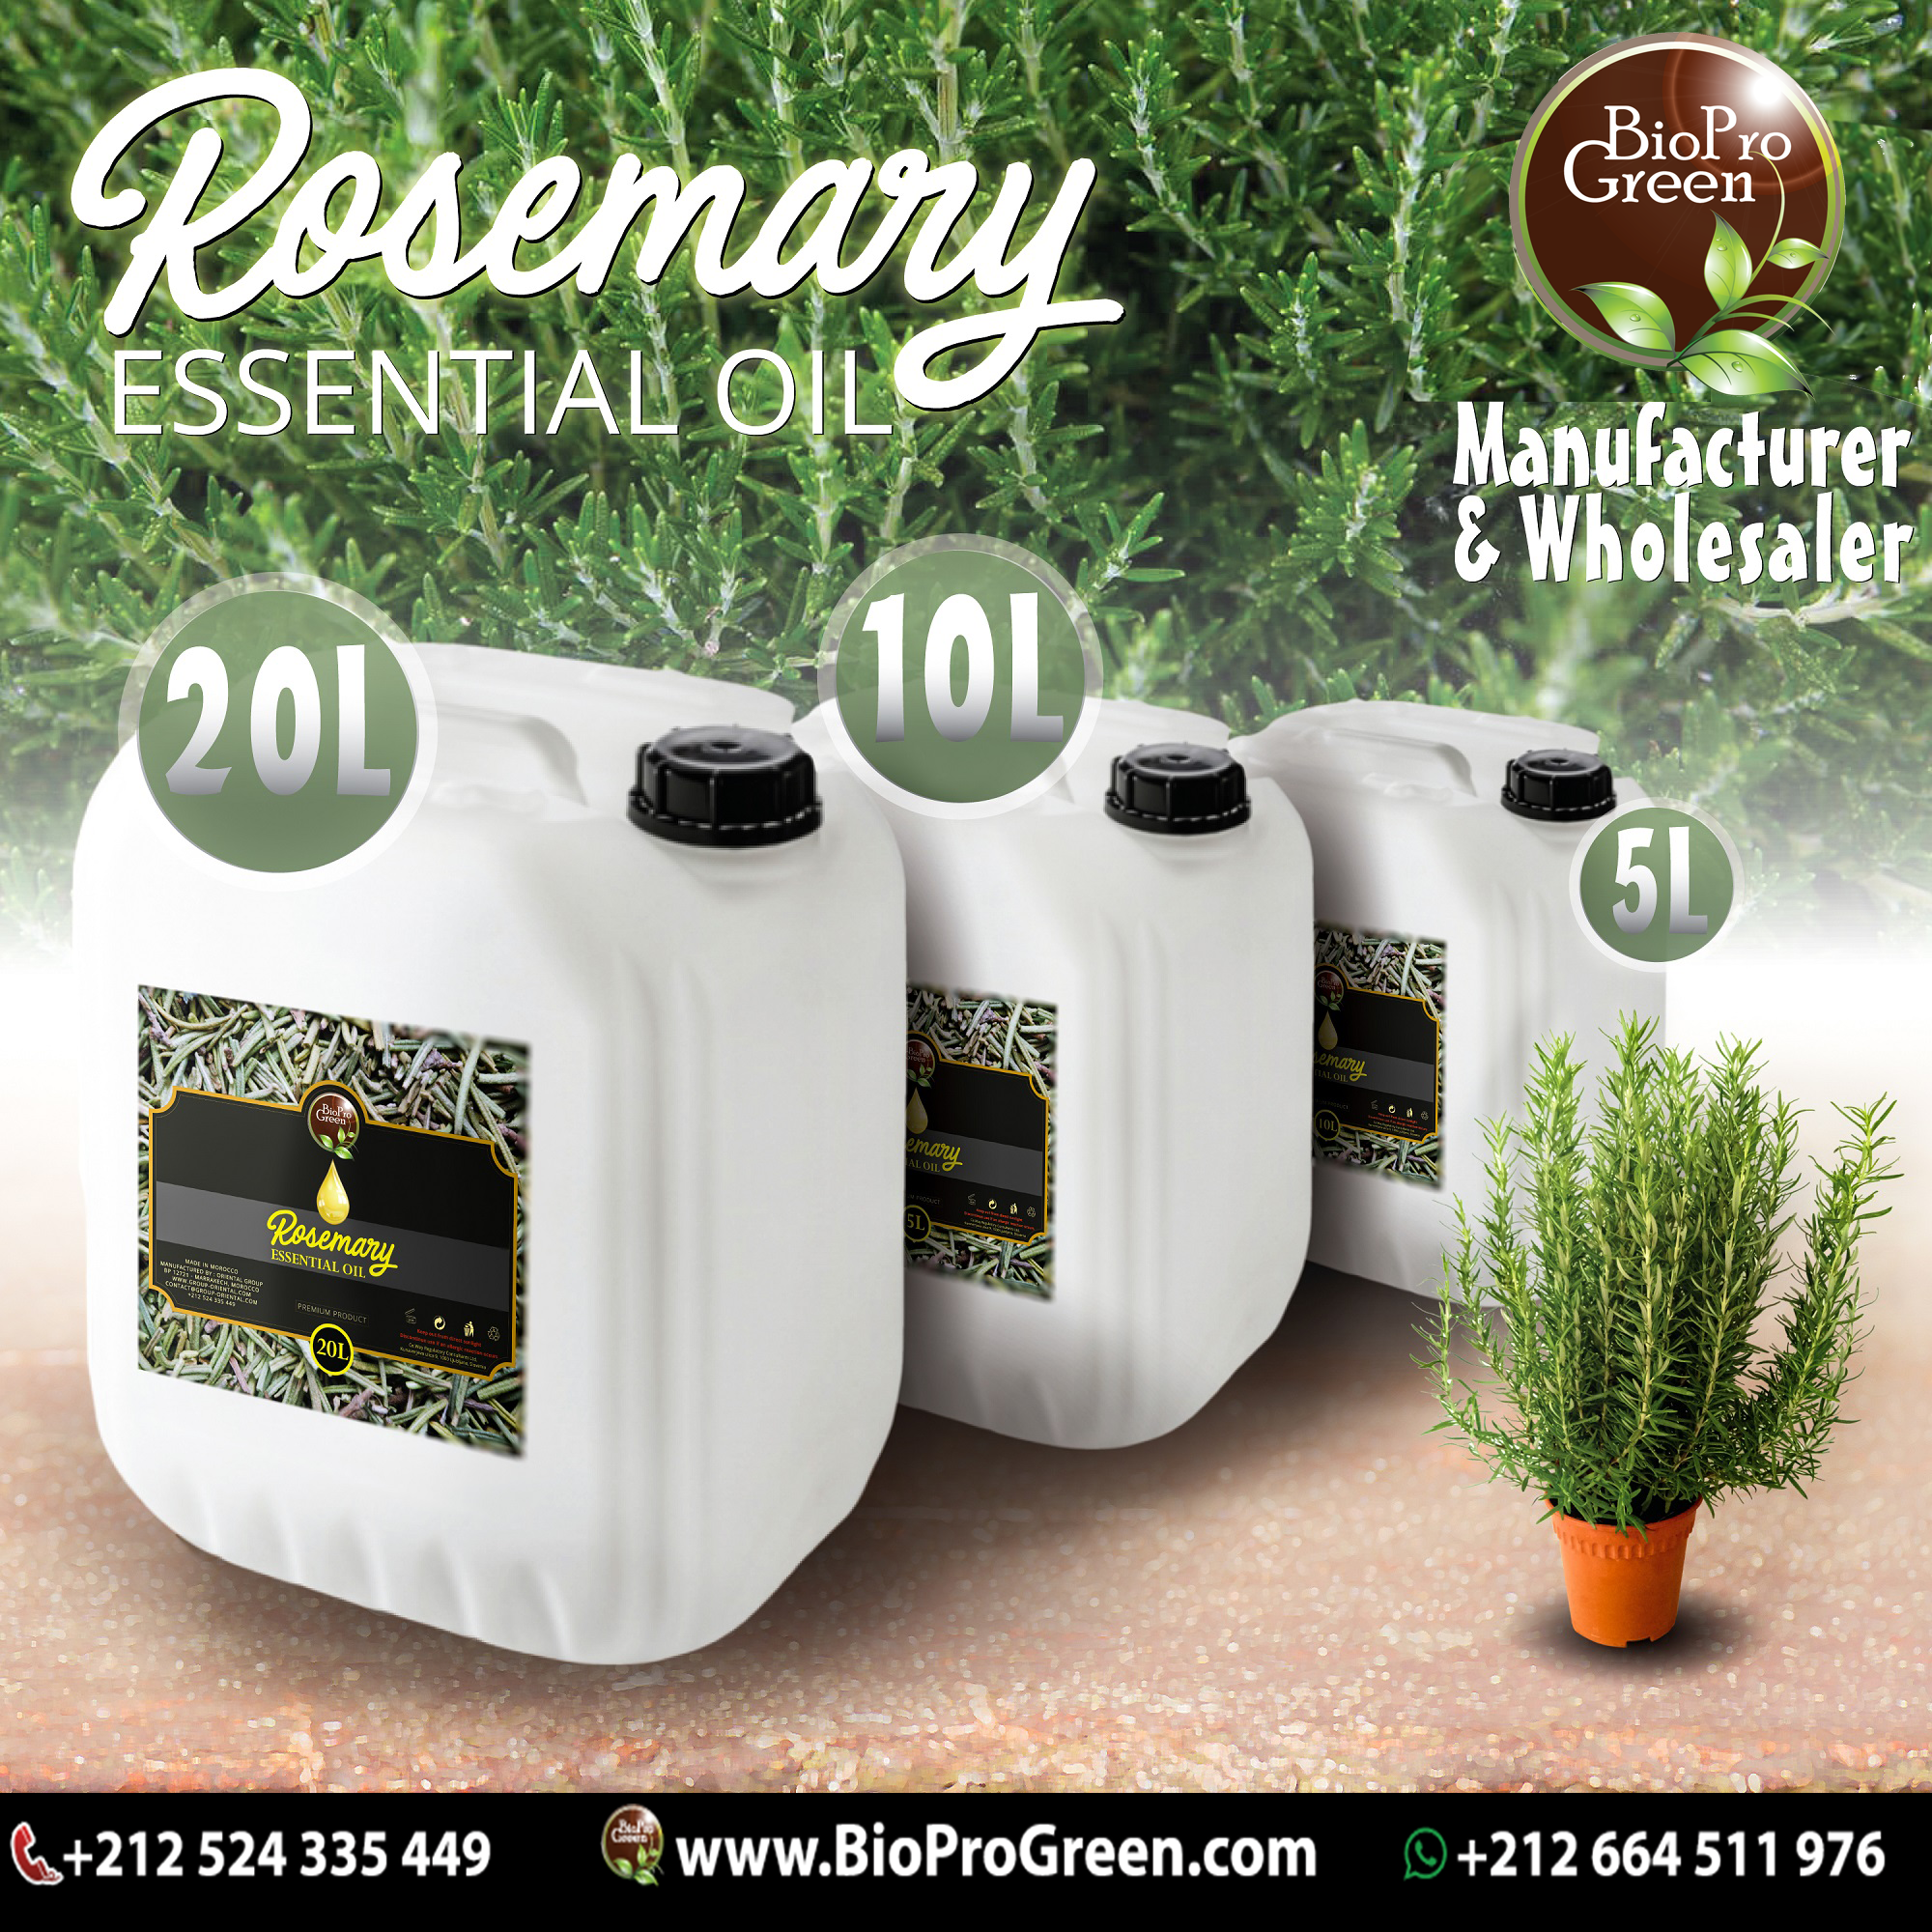 Rosemary essential oil 